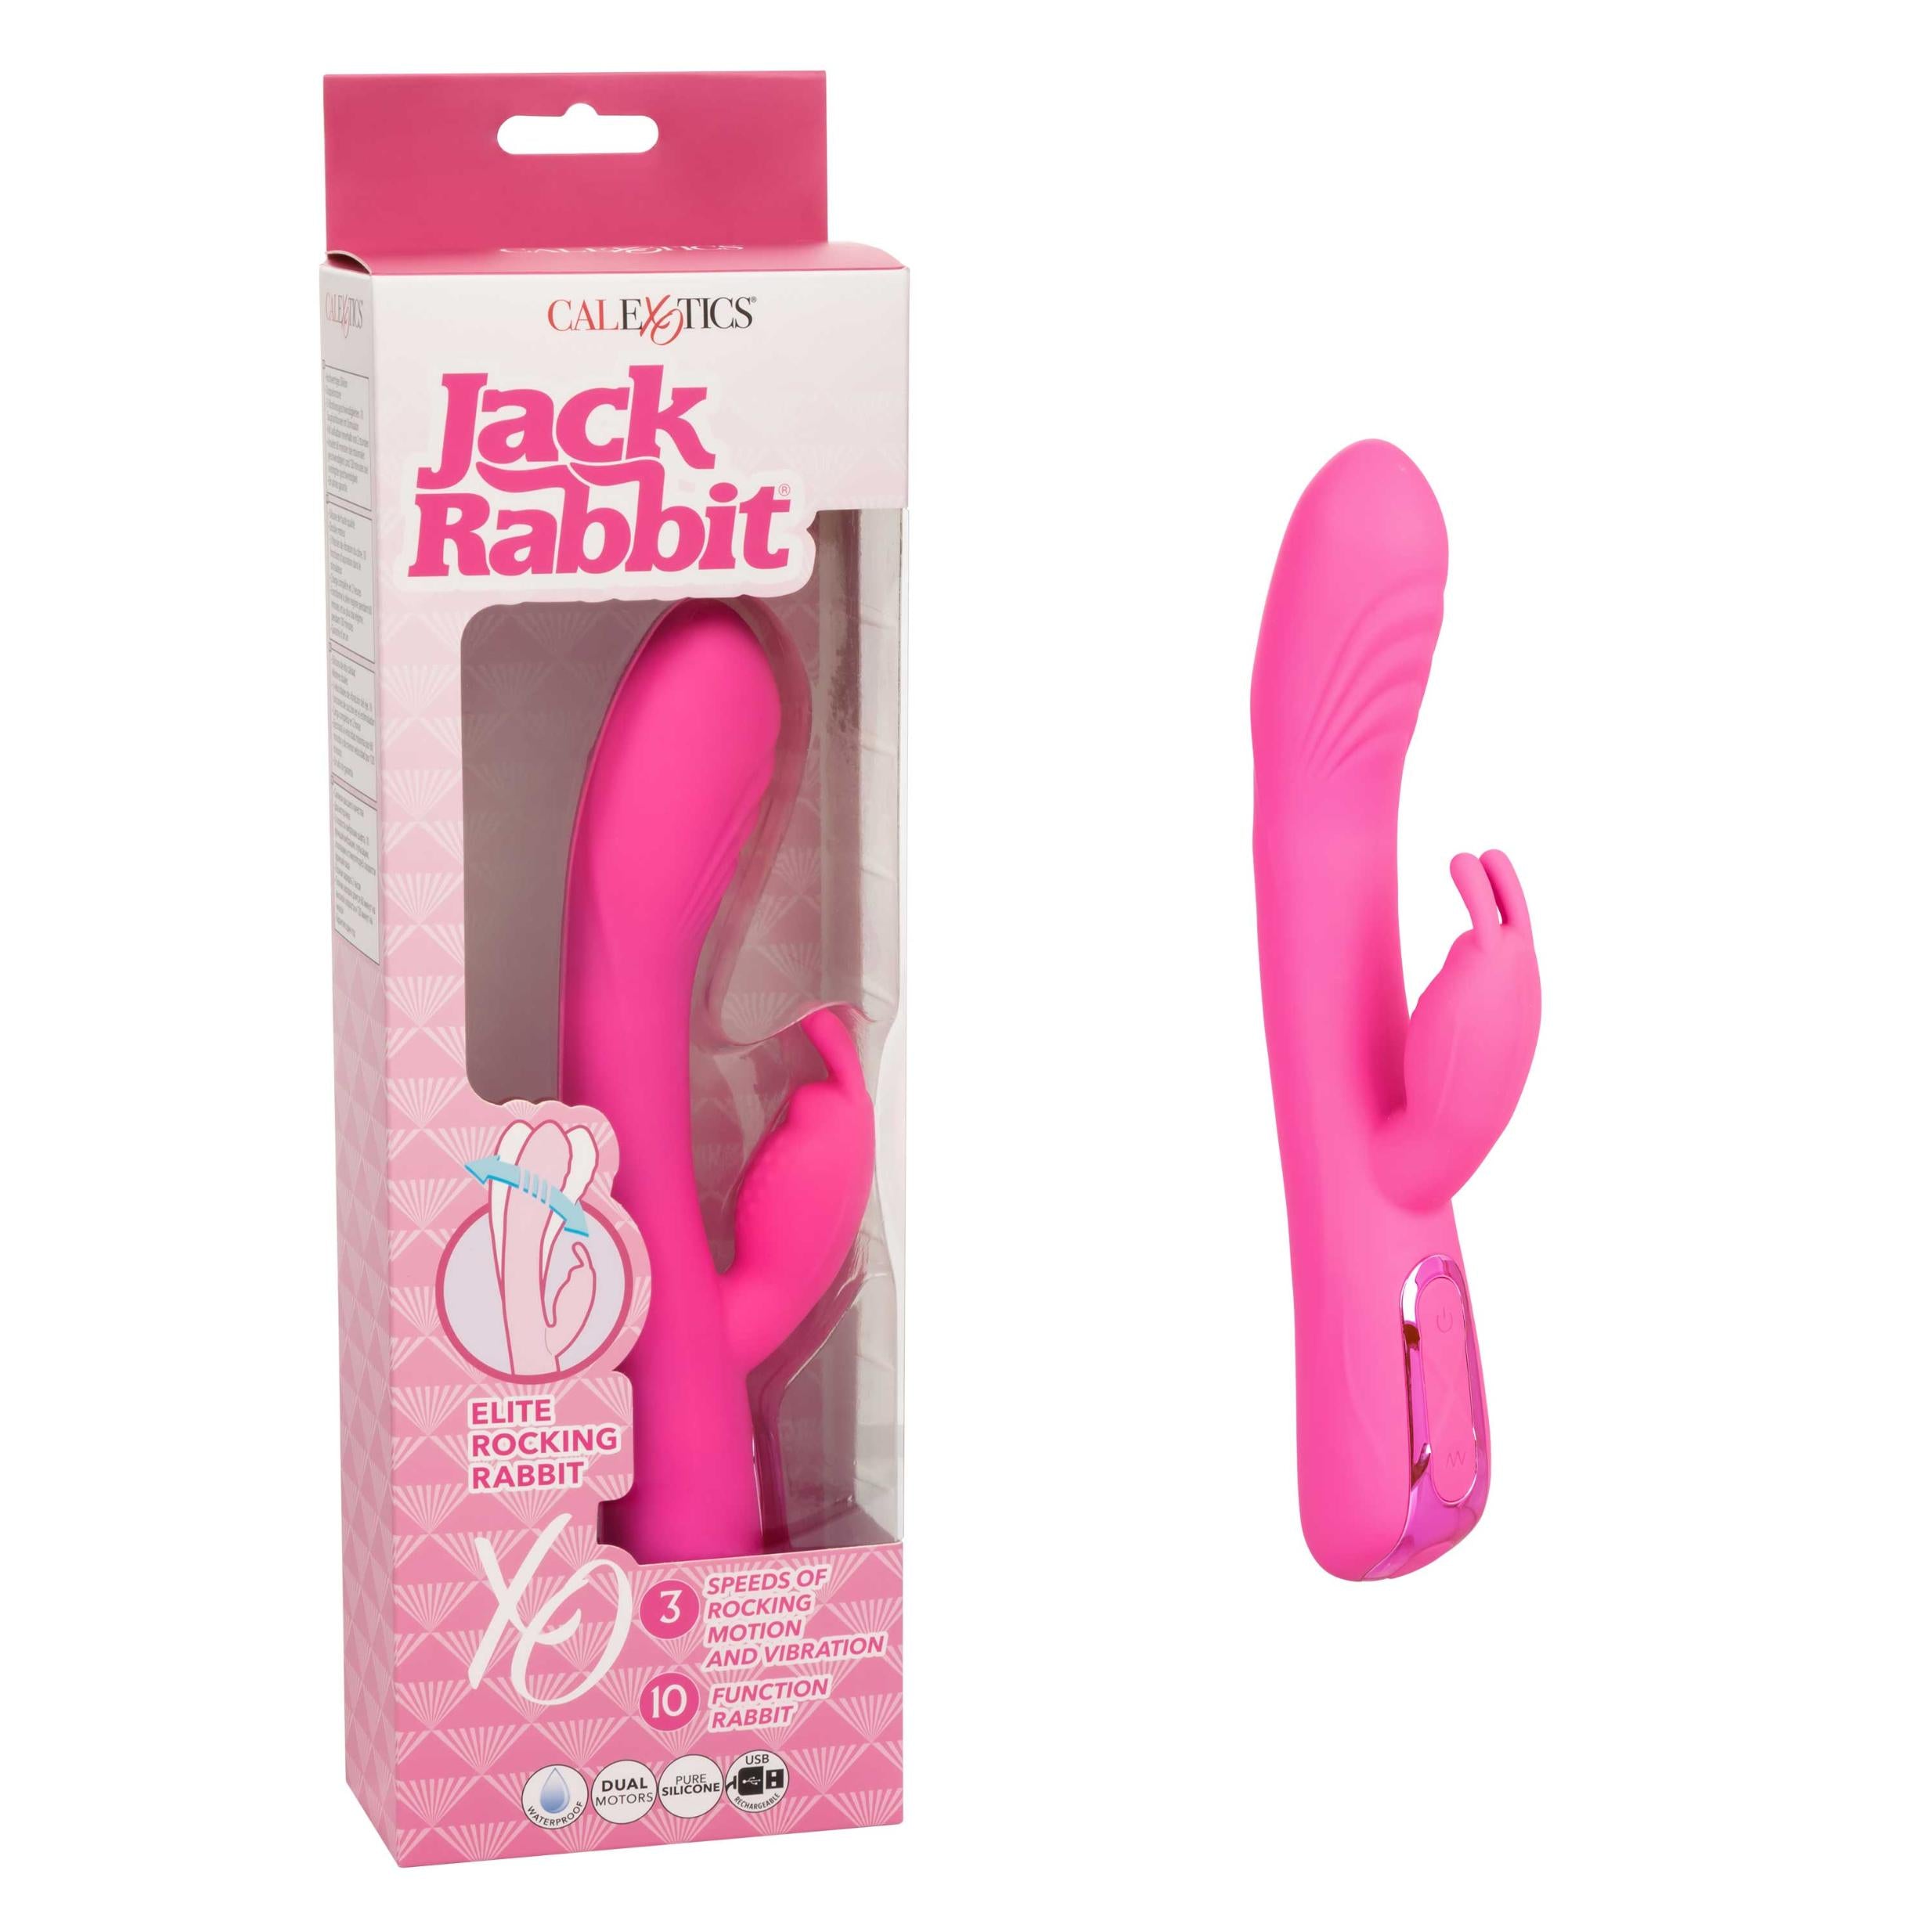 Jack Rabbit Vibrator Elite Rocking Rabbit Vibrator - Pink